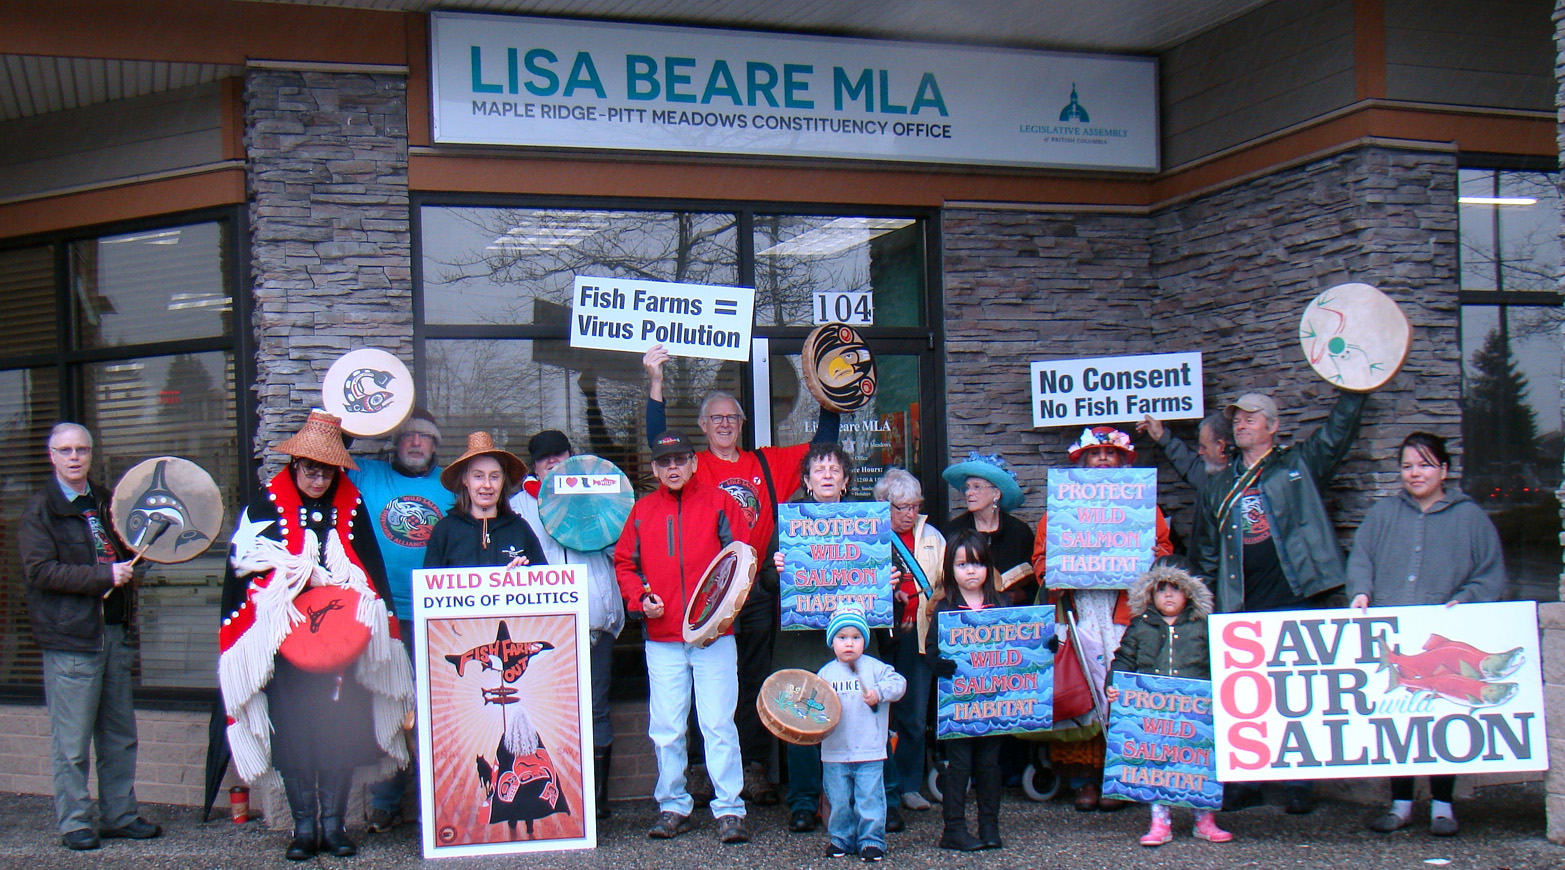 rally - lisa beare tourism office